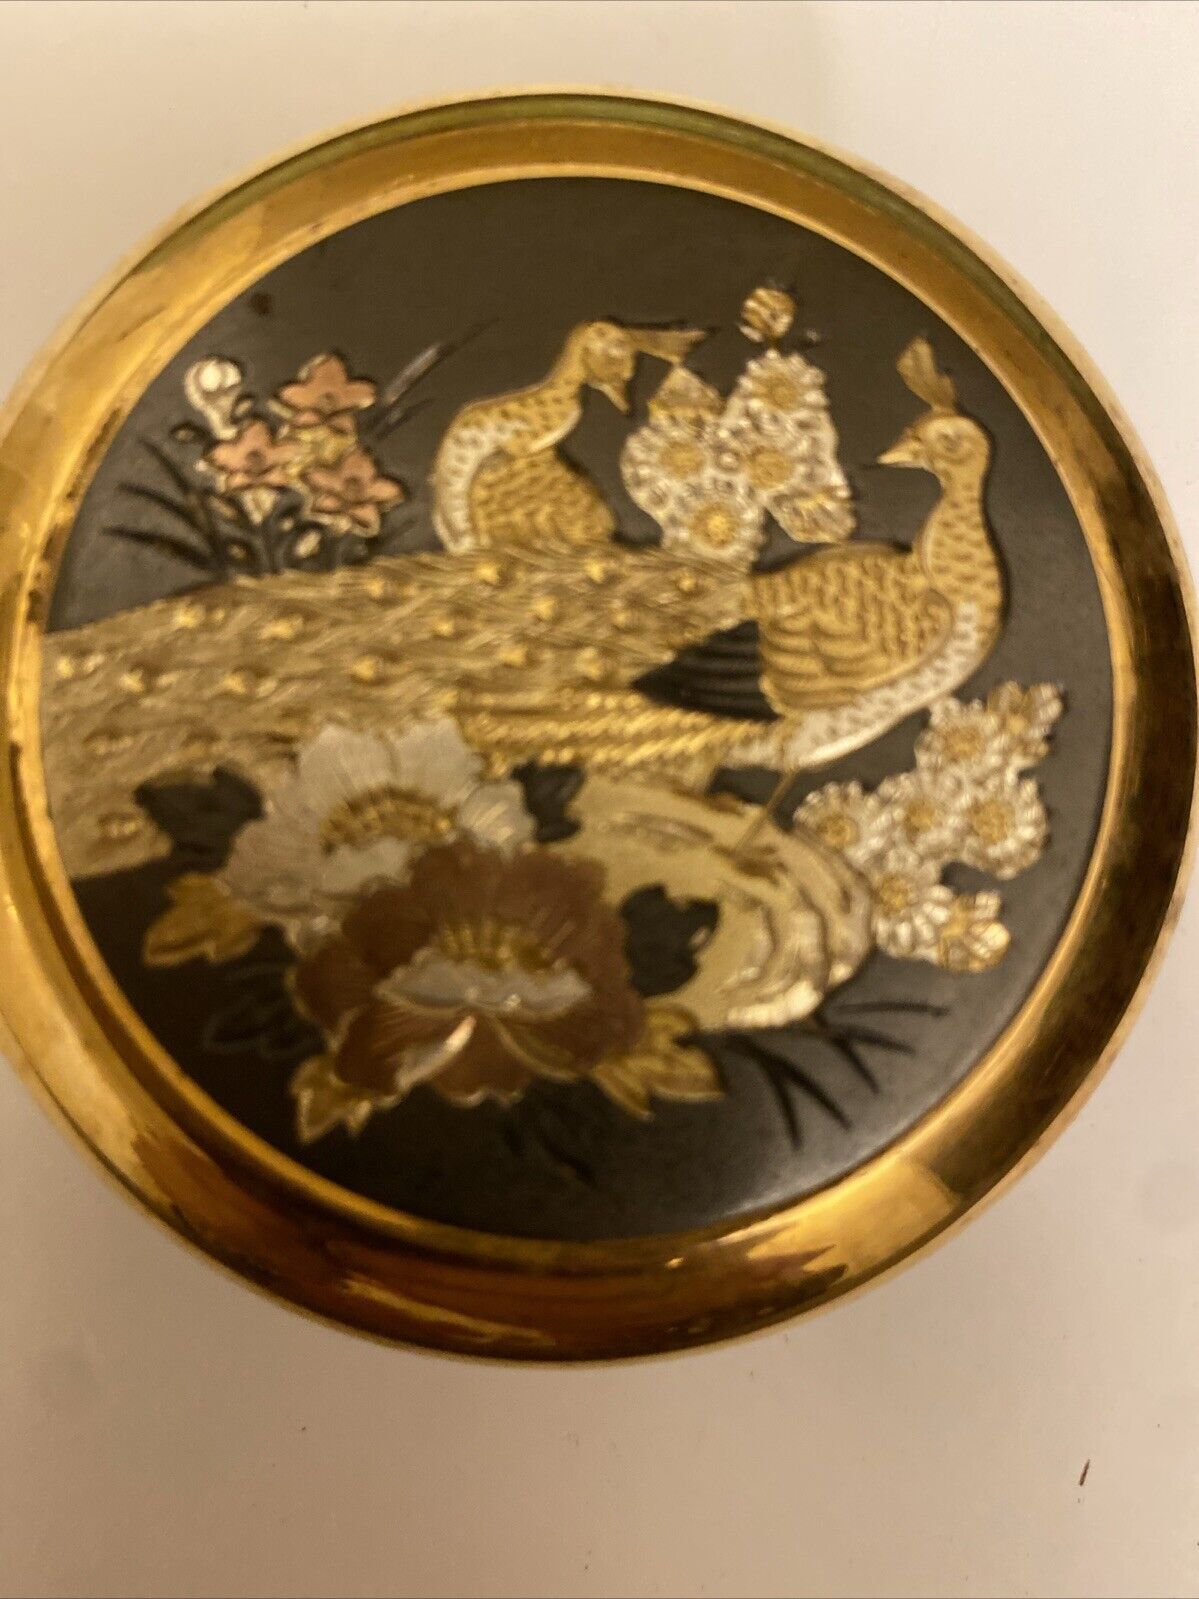 The Art Of Chokin  24k Gold Edged Trinket Box With Peacocks